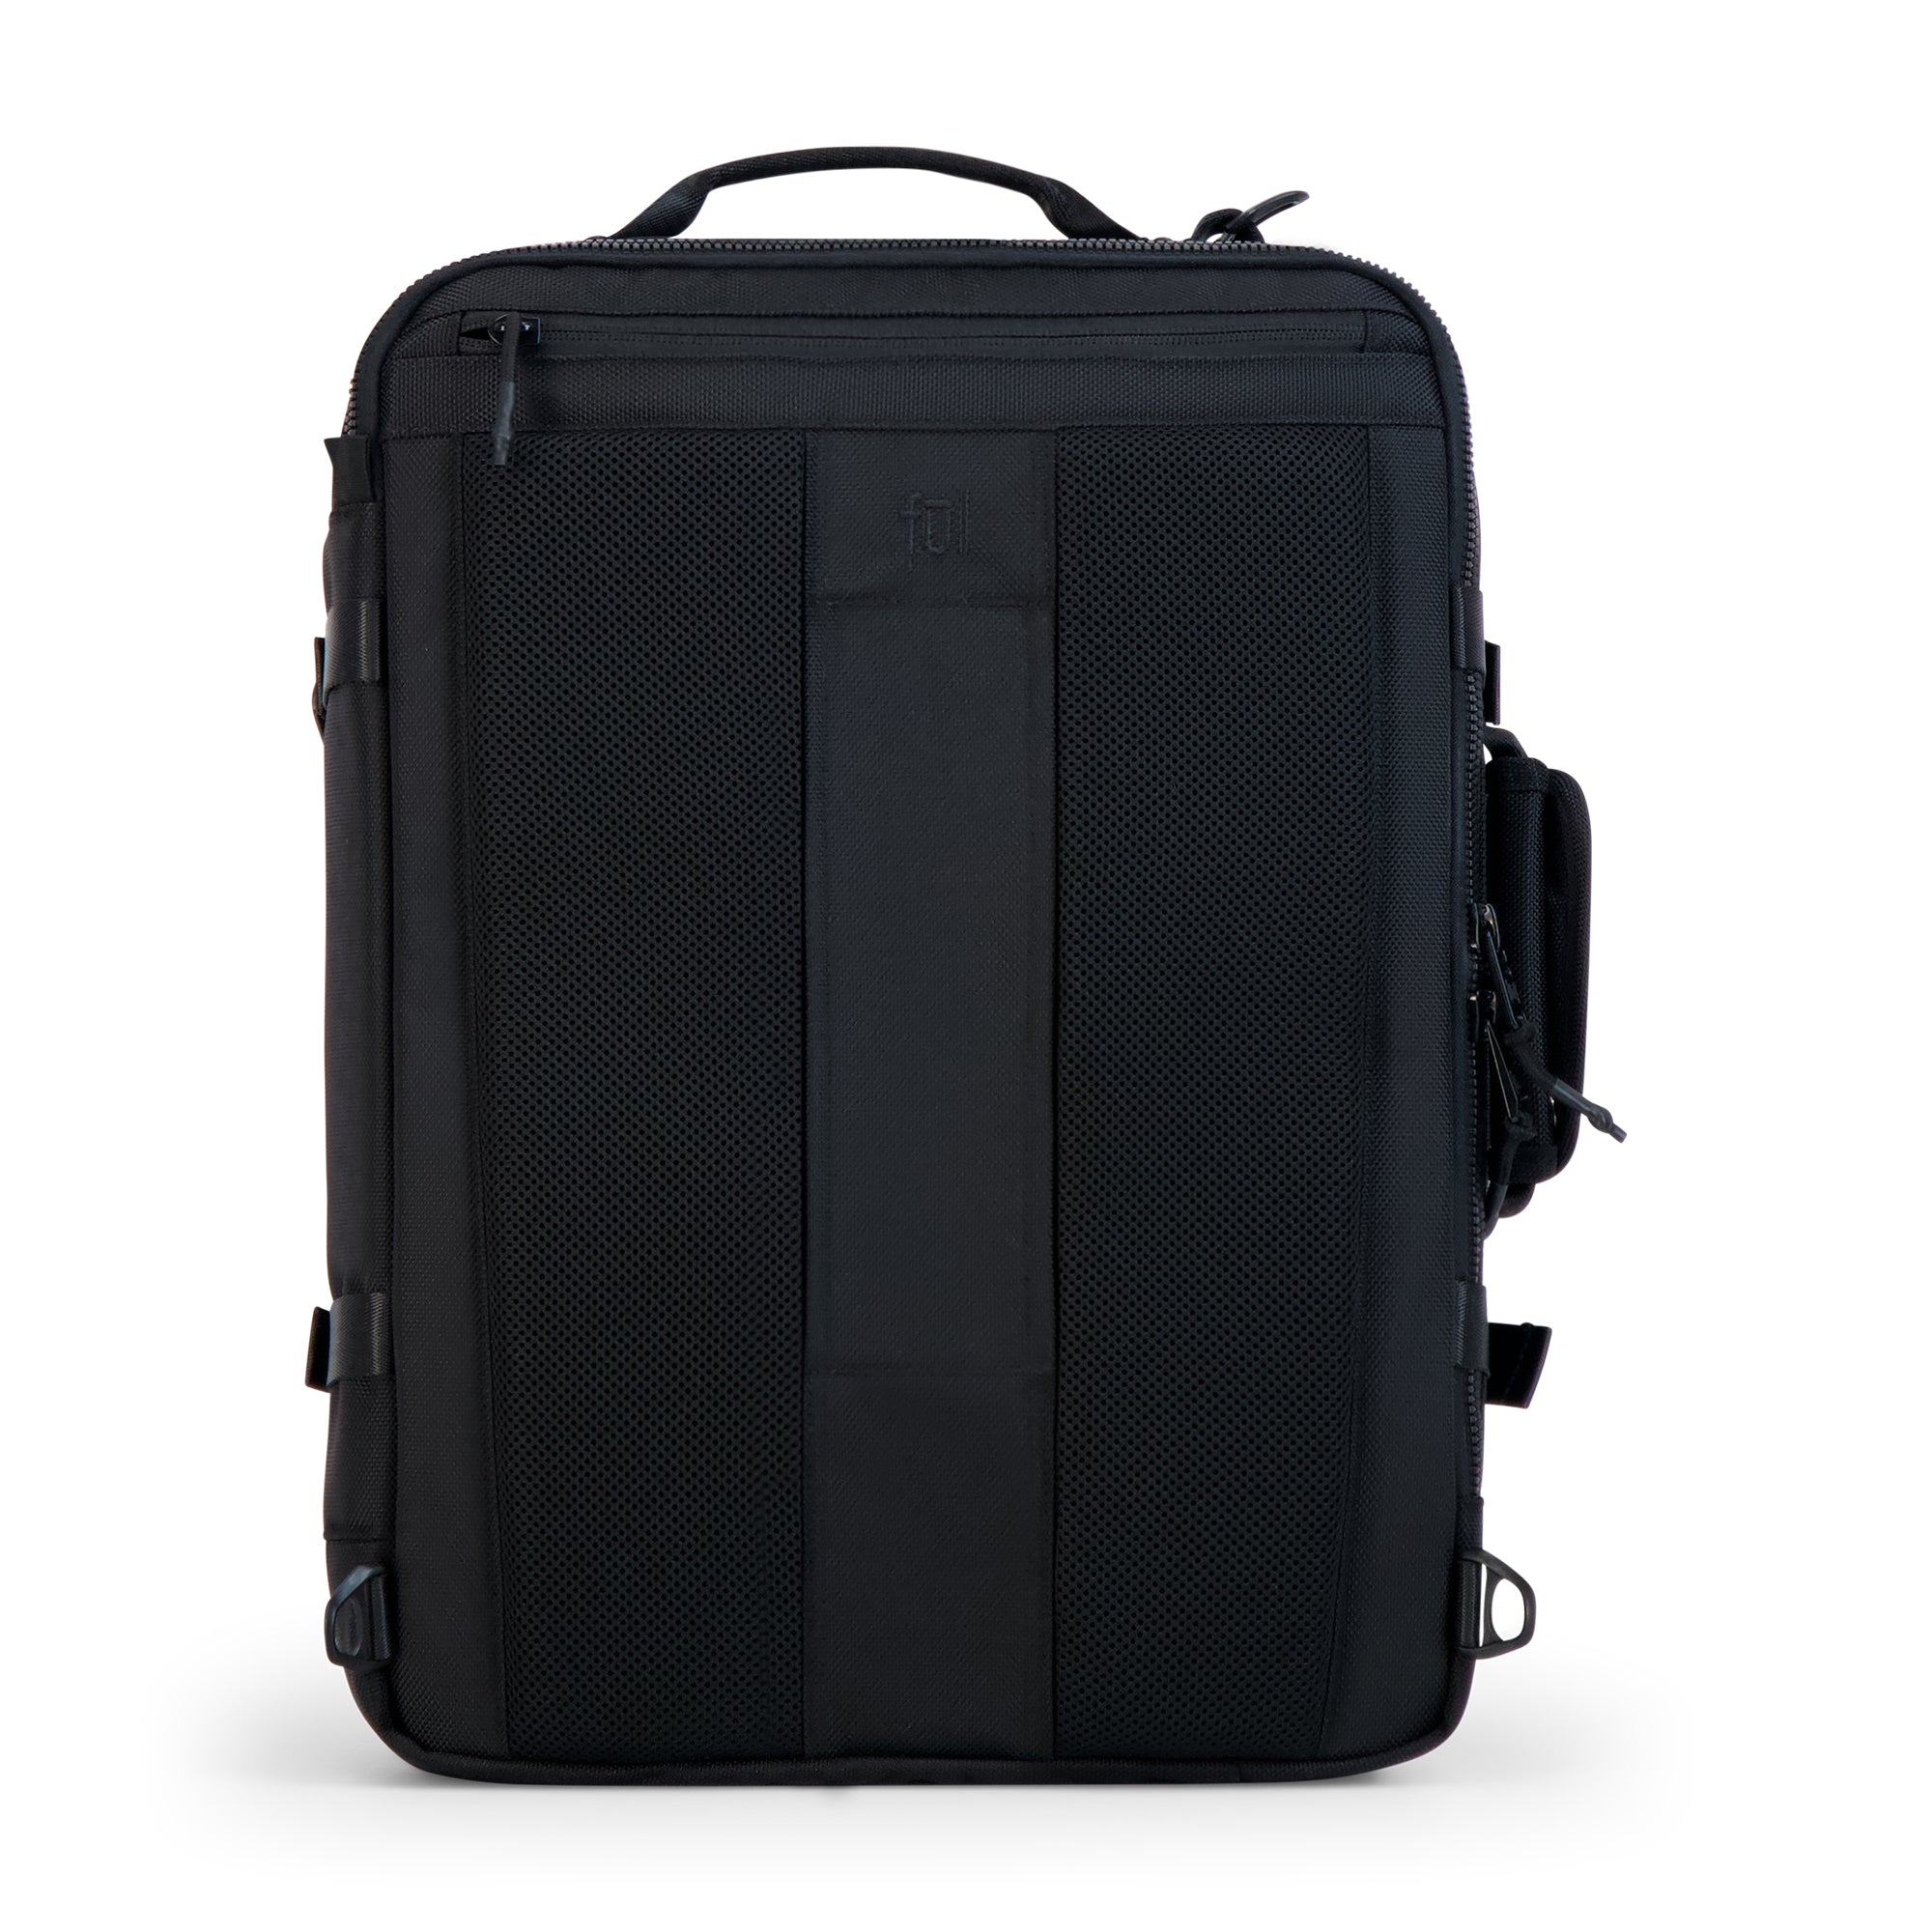 FUL Cruiser Laptop Backpack